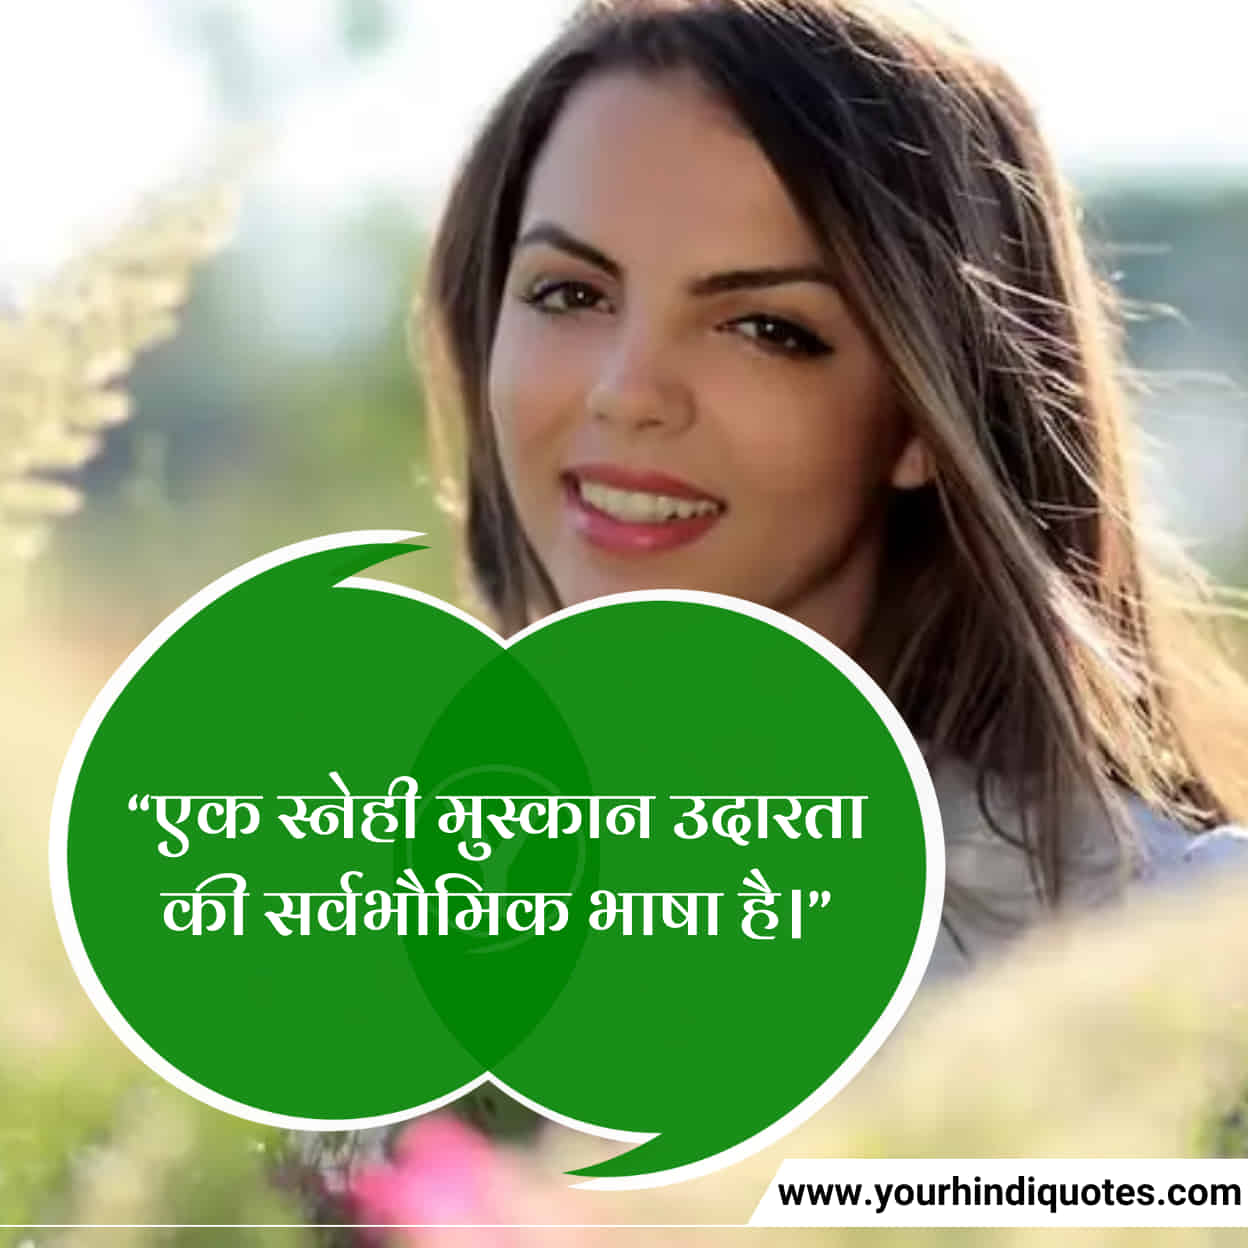 Cute Hindi Smile Quotes